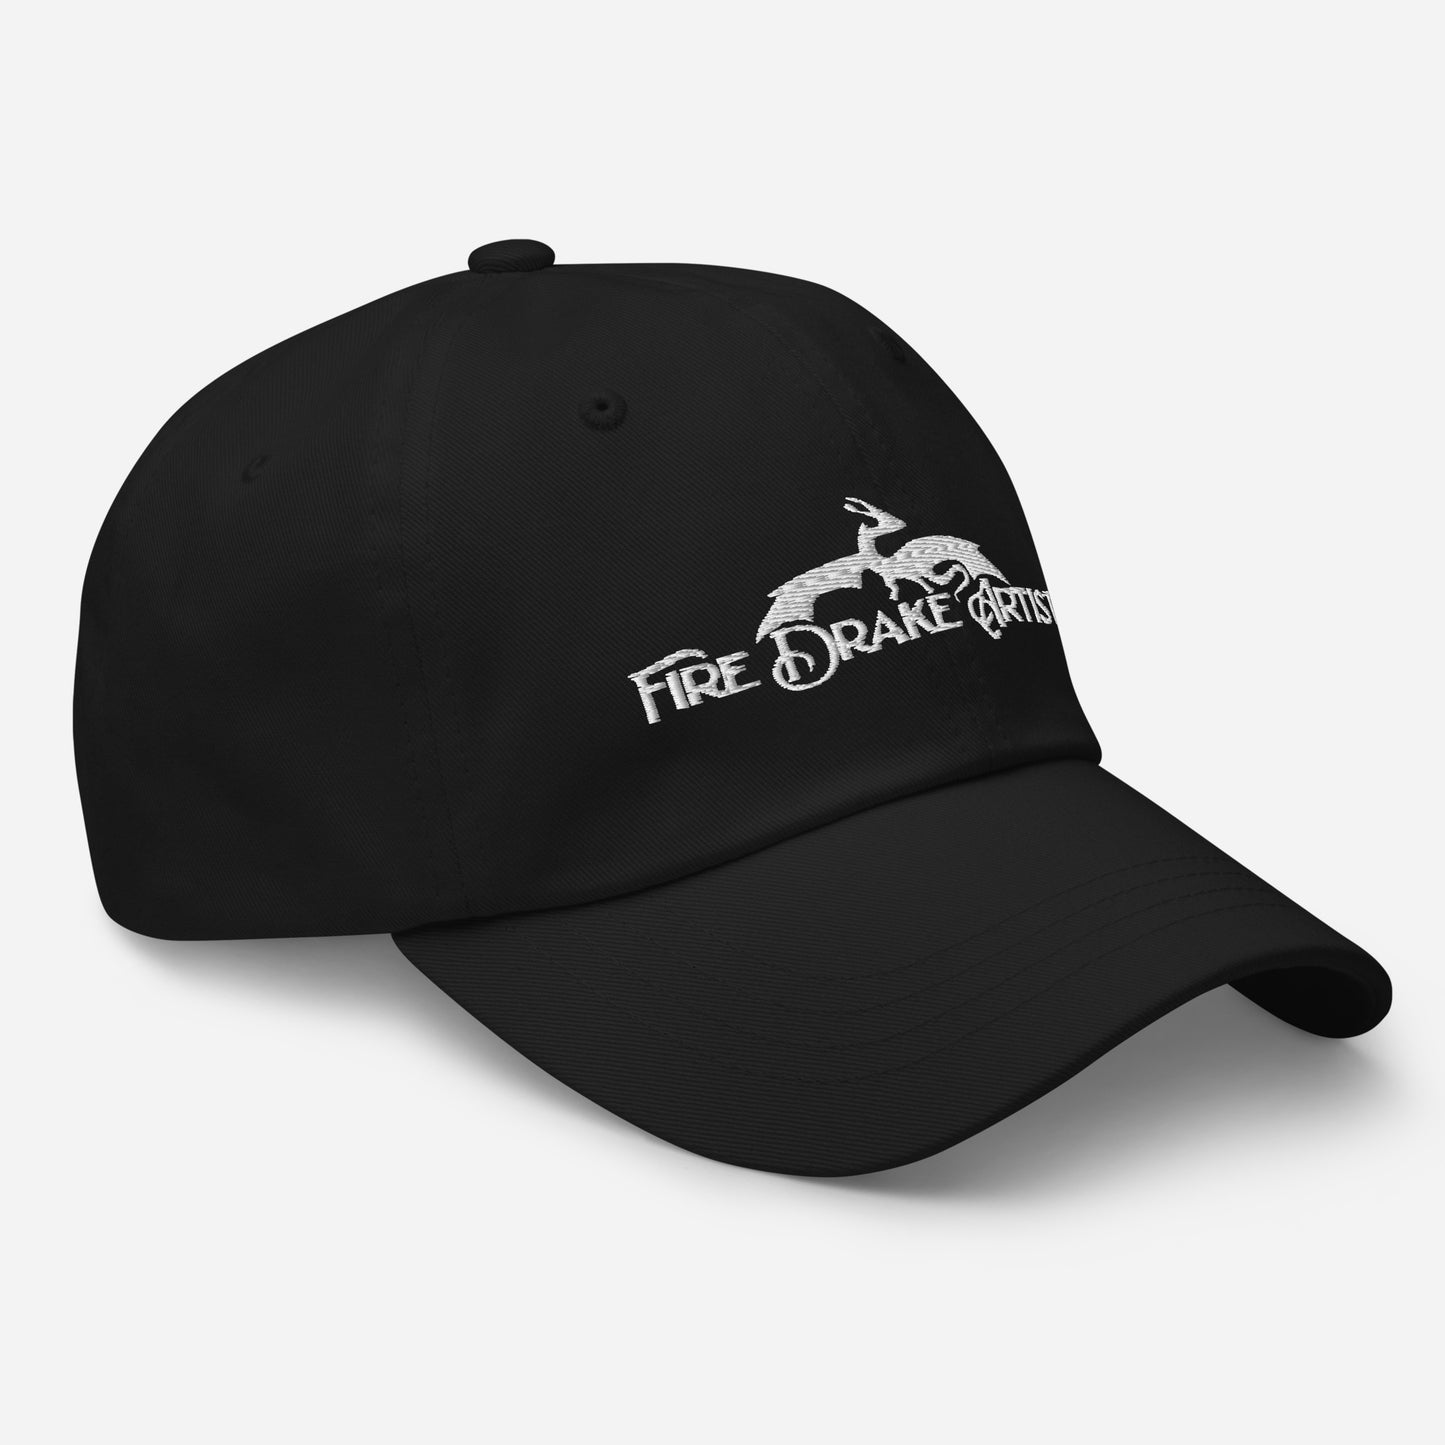 FireDrake Artistry™ Dad hat for FireDrake Artistry